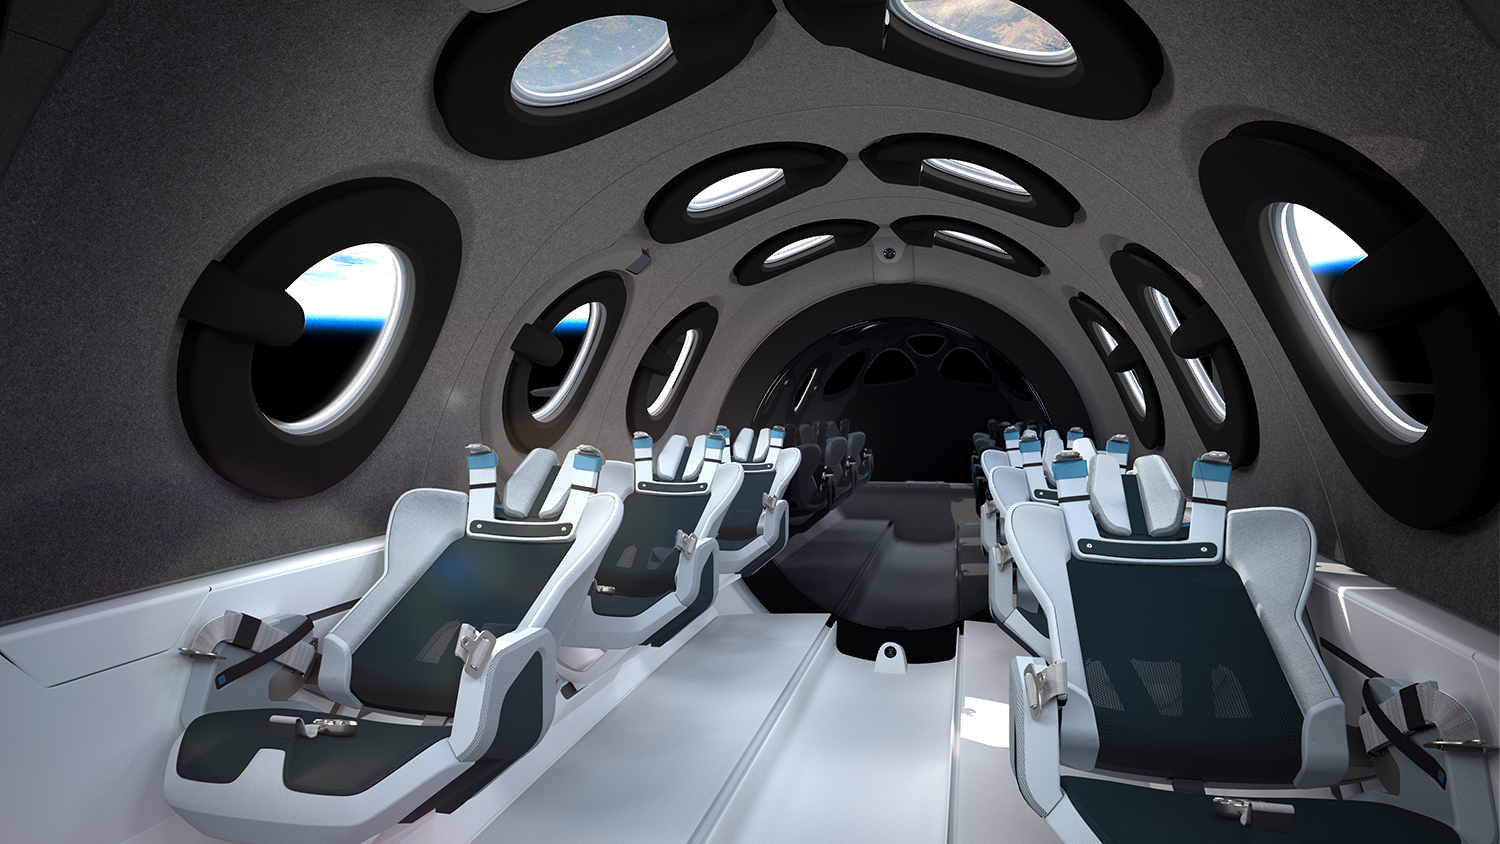 Virgin Galactic spaceship interior